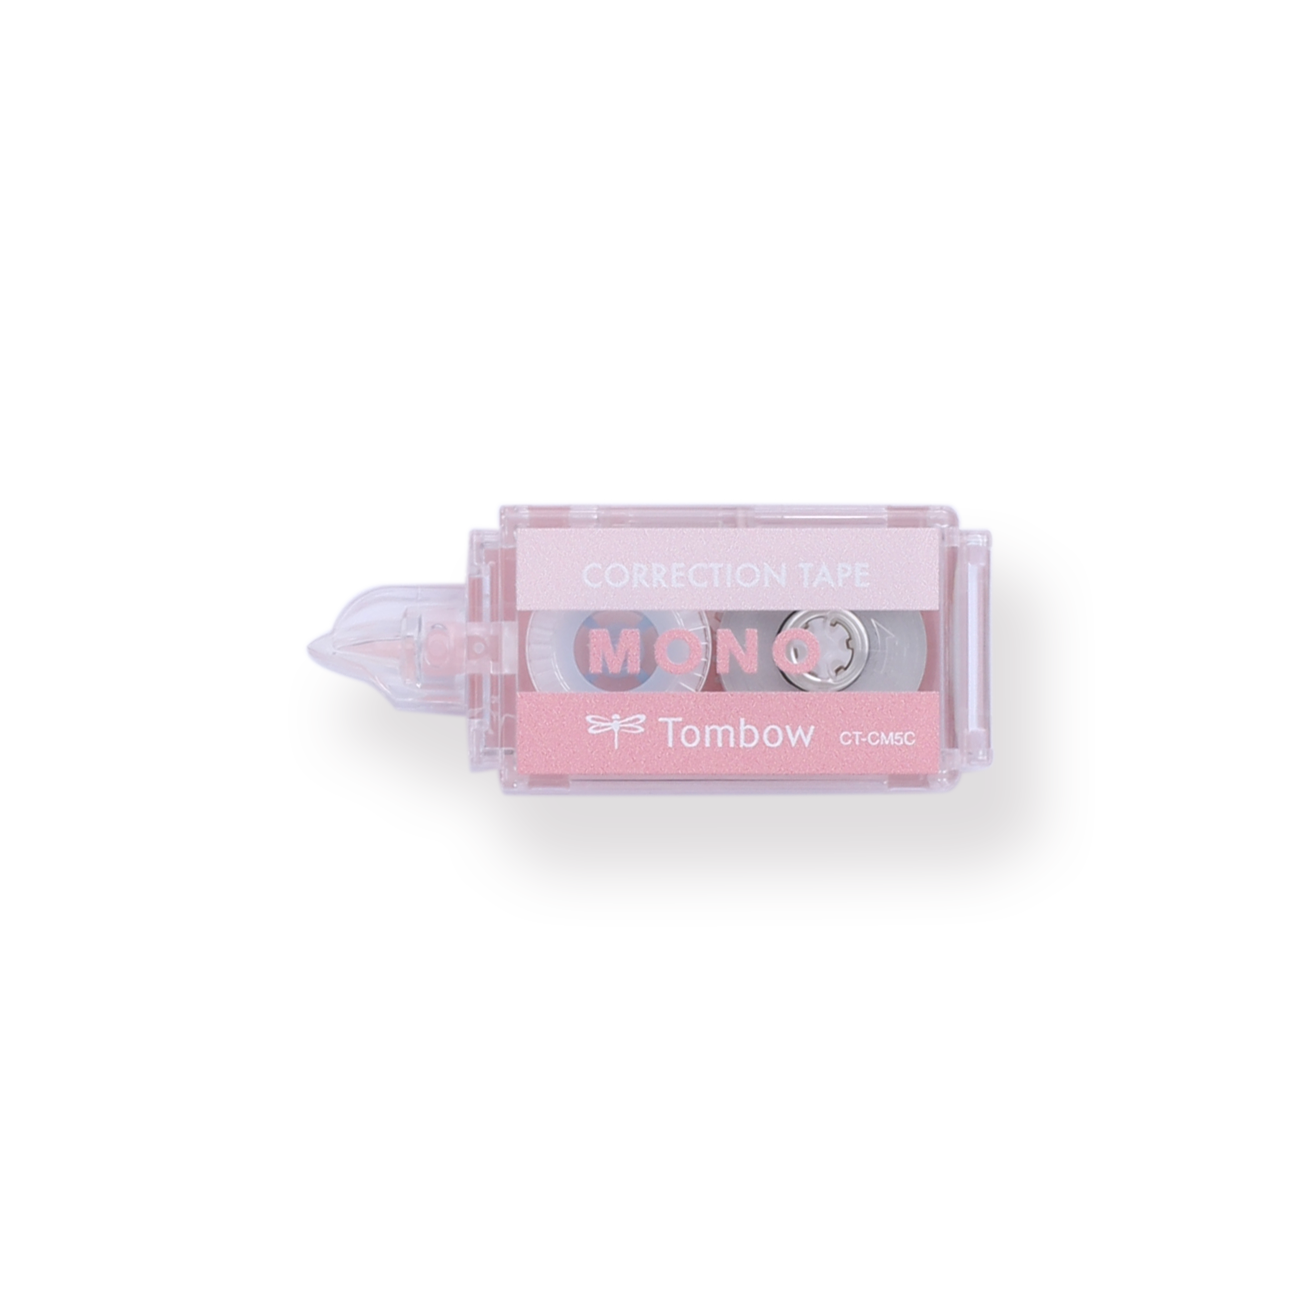 Tombow MONO Correction Tape - Pocket Series - Pink - Stationery Pal